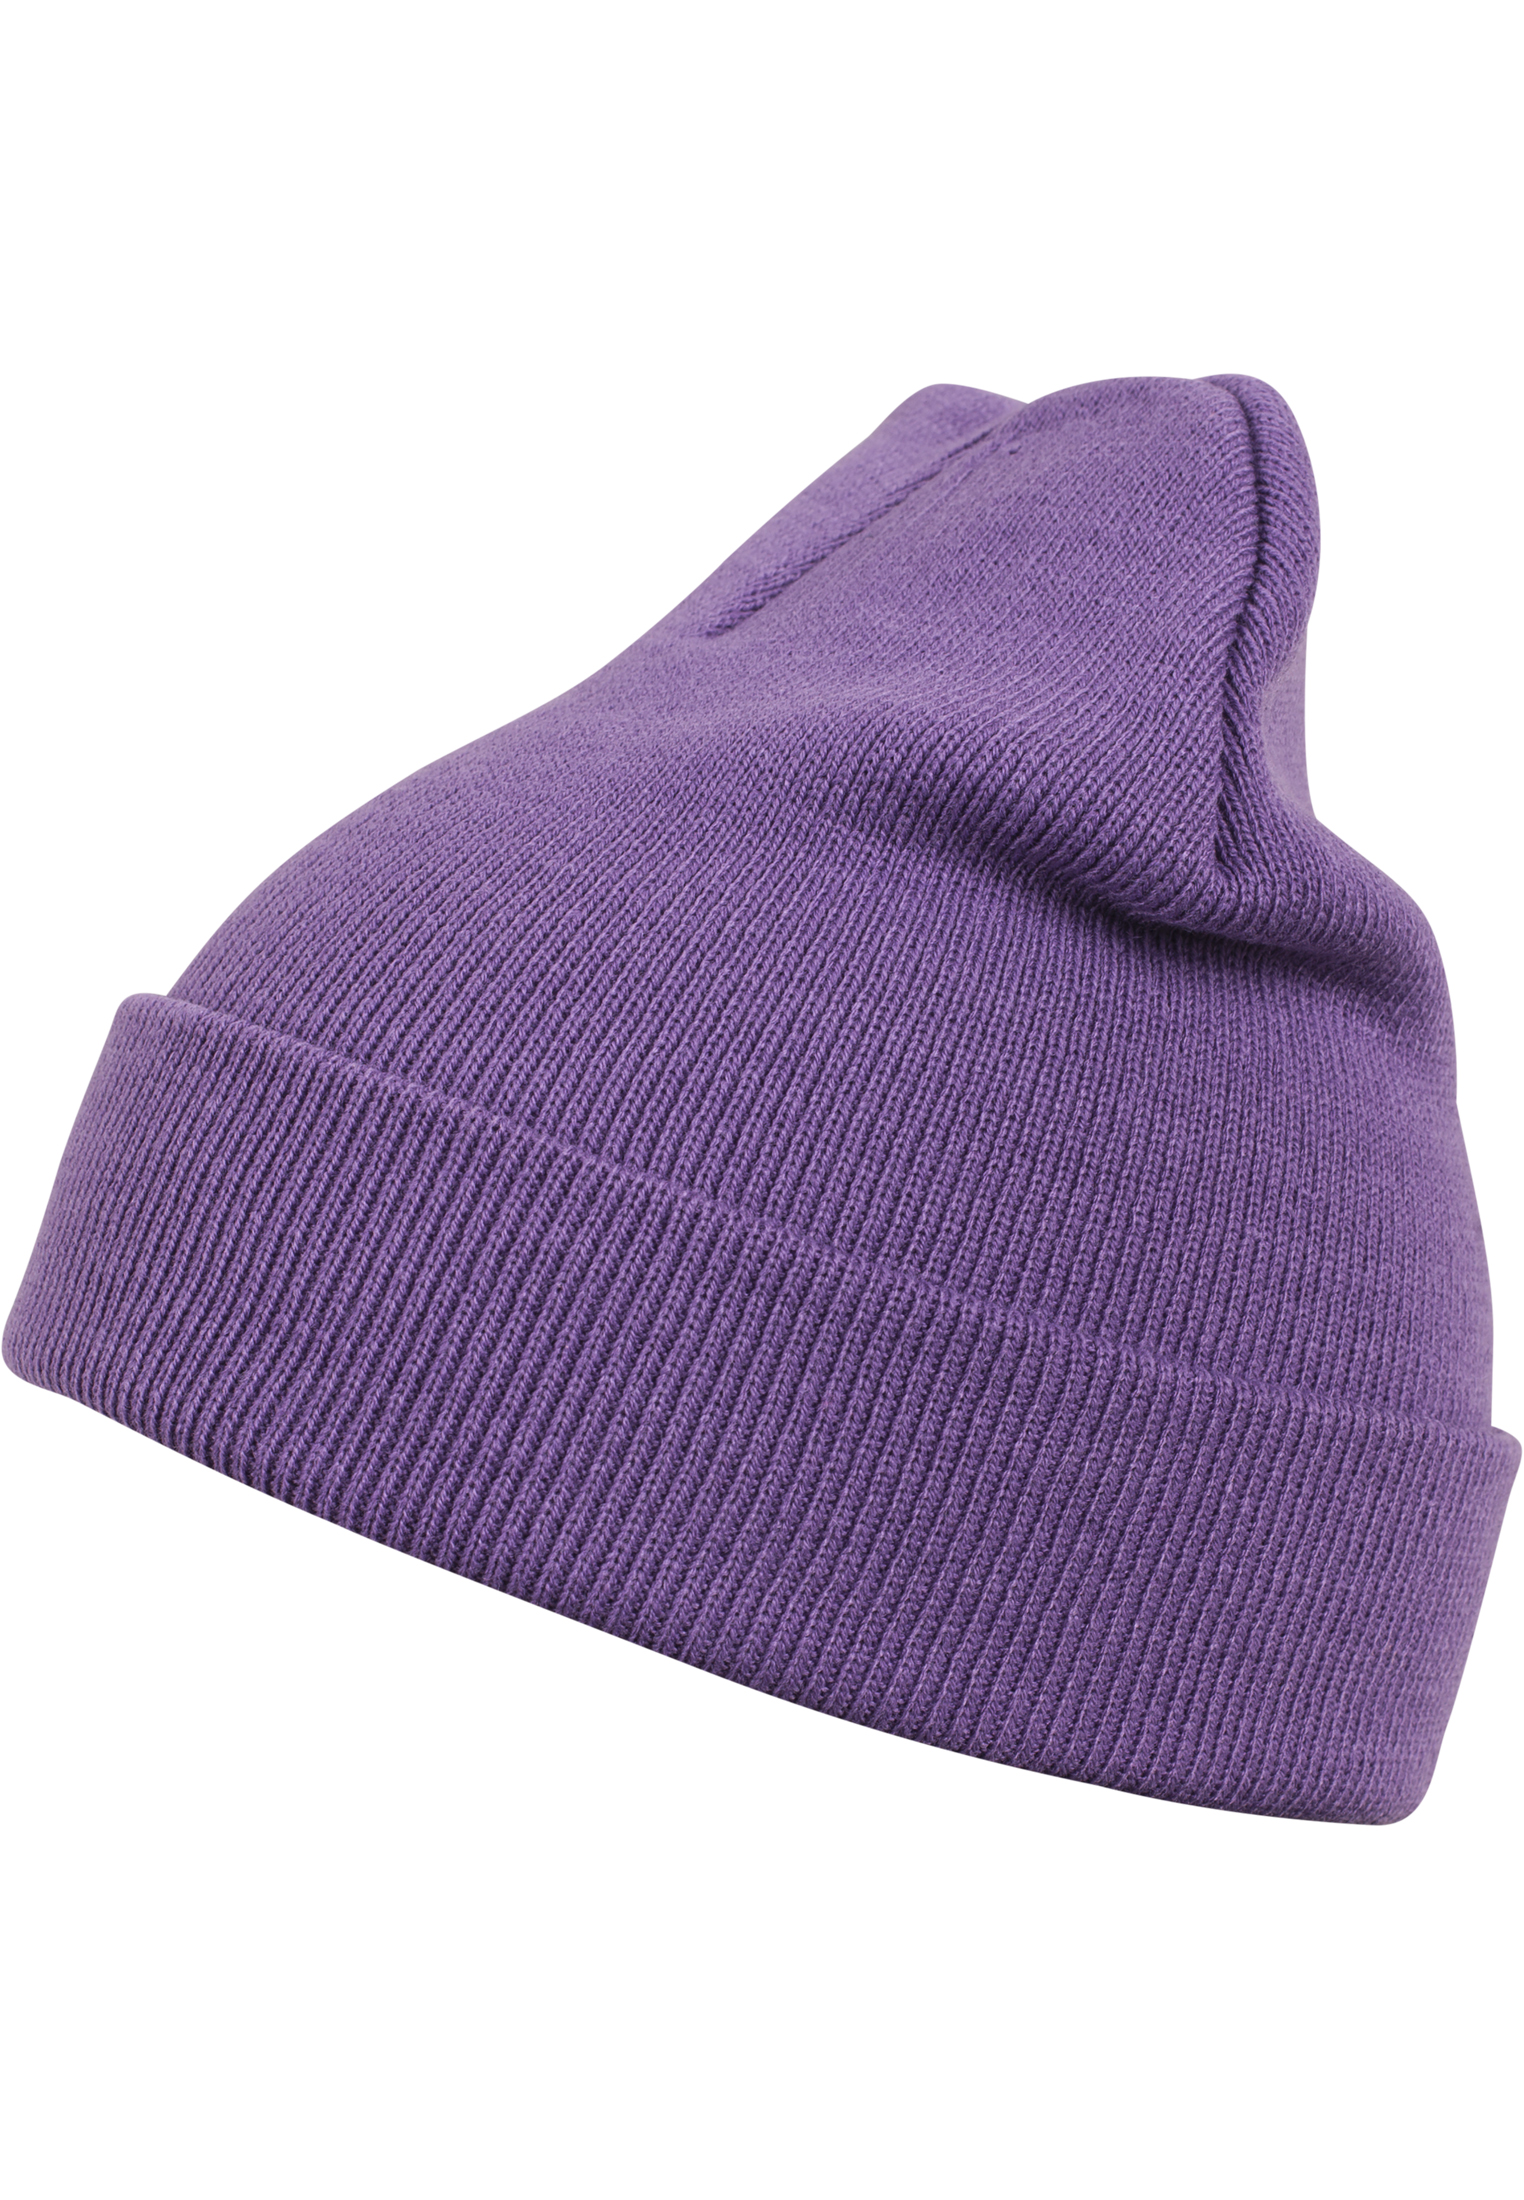 Caps & Beanies Beanie Basic Flap in Farbe purple